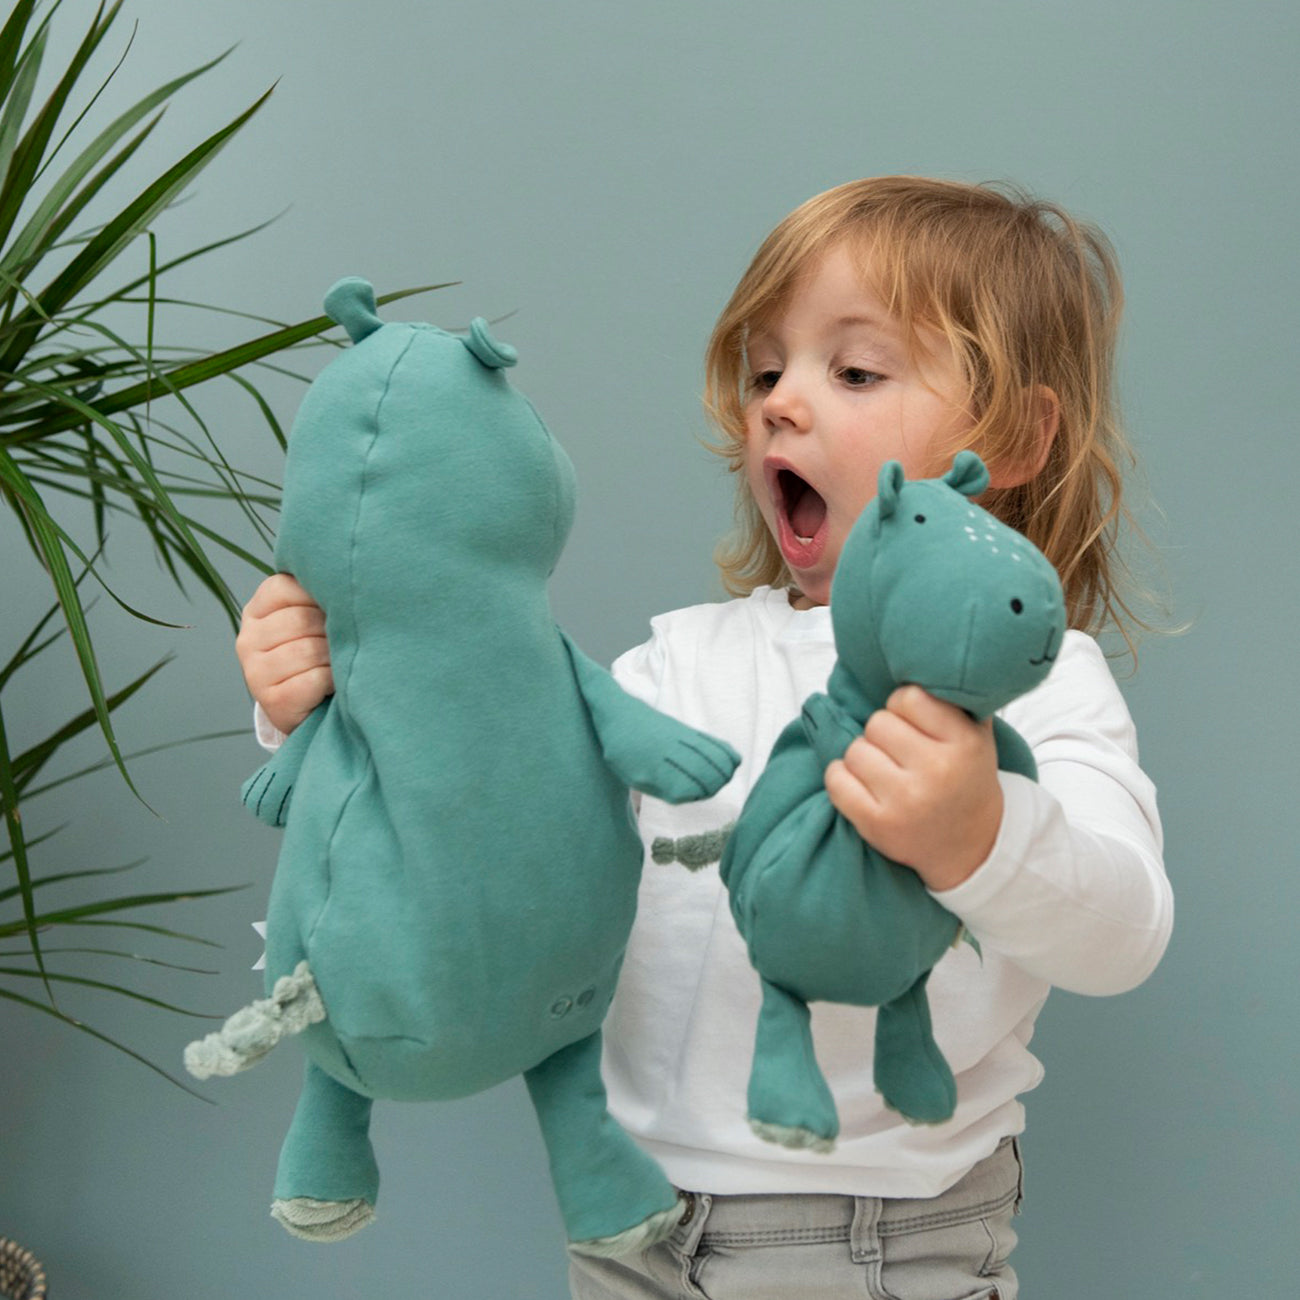 Large Plush Toy - Mr. Hippo